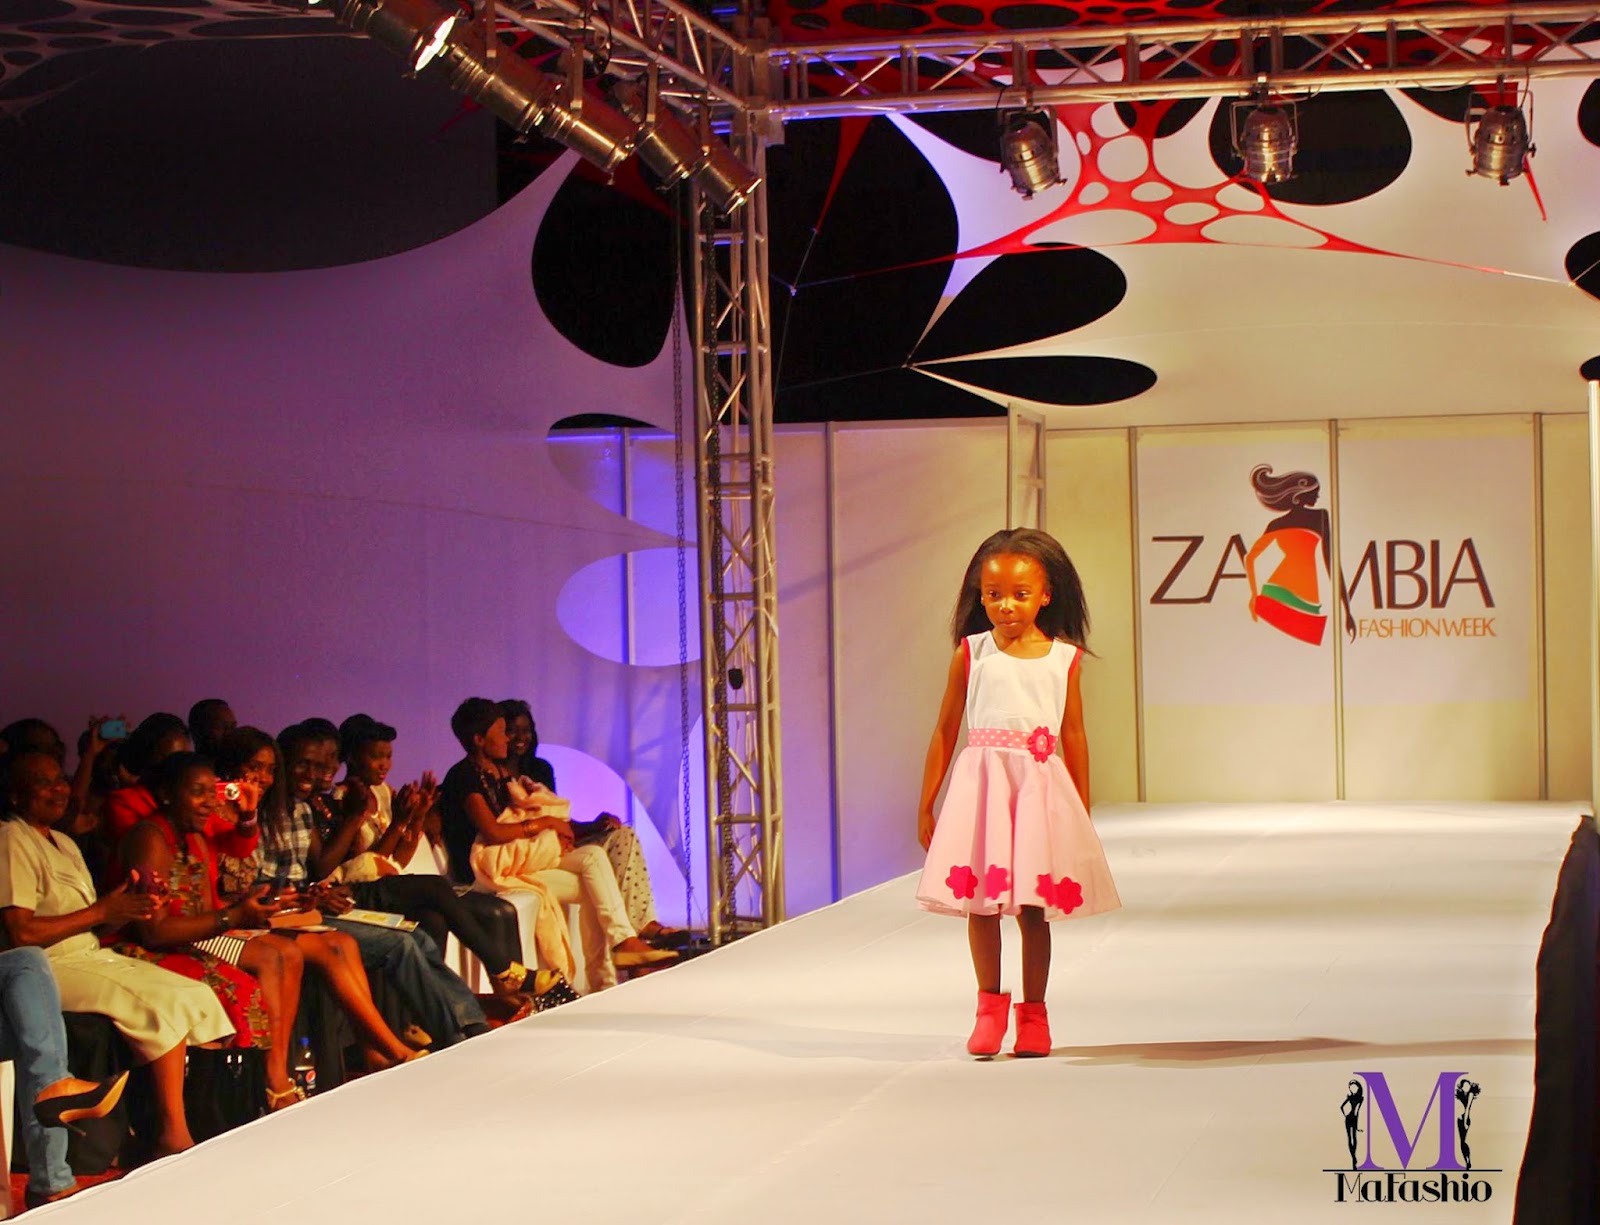 MaFashio: Zambia Fashion Week 2014: Day Two!